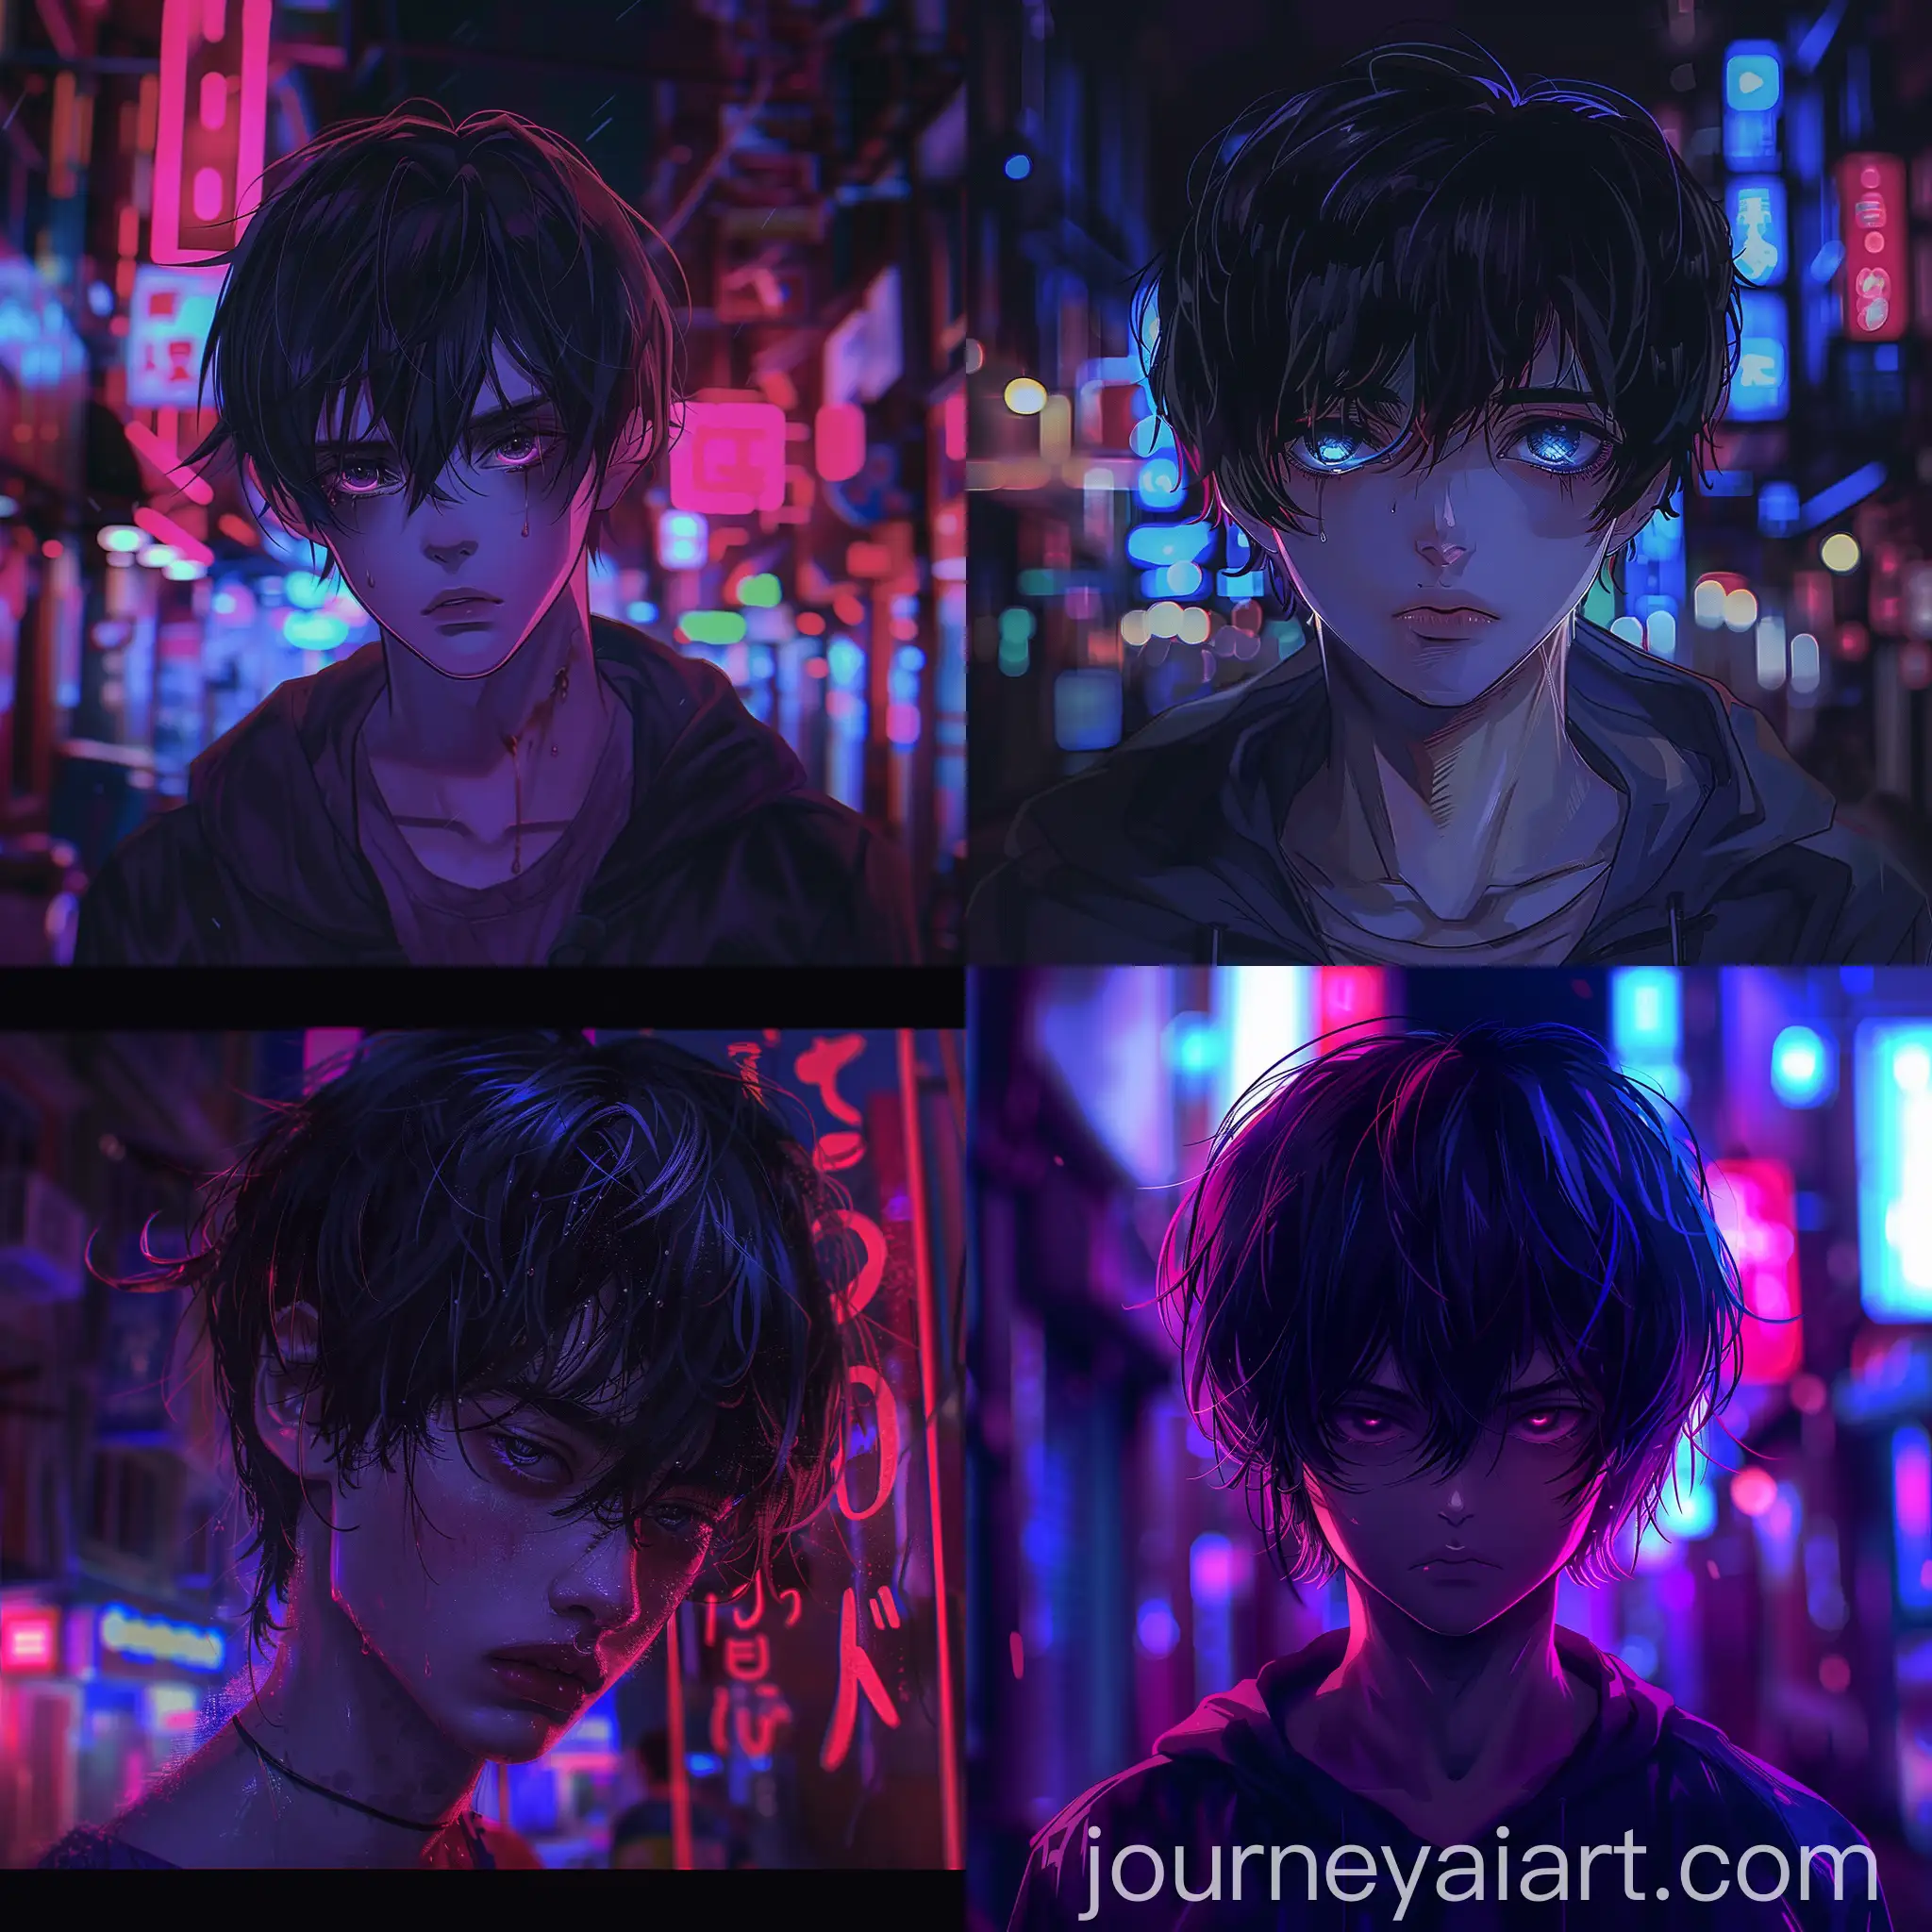 Lonely-Anime-Boy-in-Neon-Lighting-Detailed-Makoto-Shinkai-Style-Portrait